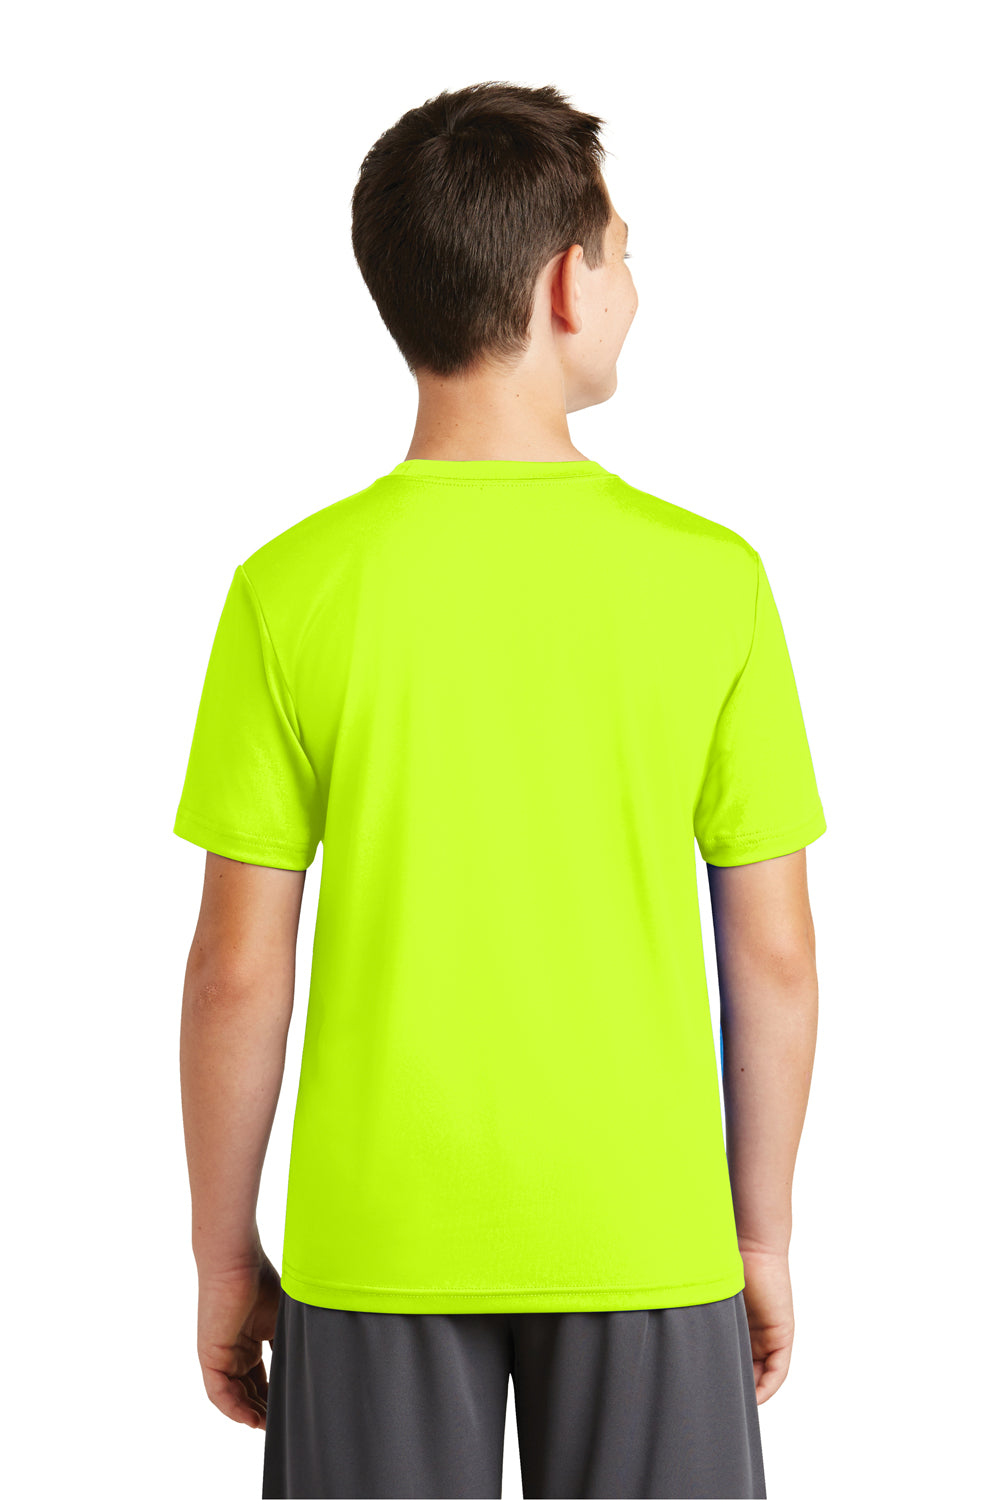 Sport-Tek YST320 Youth Tough Moisture Wicking Short Sleeve Crewneck T-Shirt Neon Yellow Back